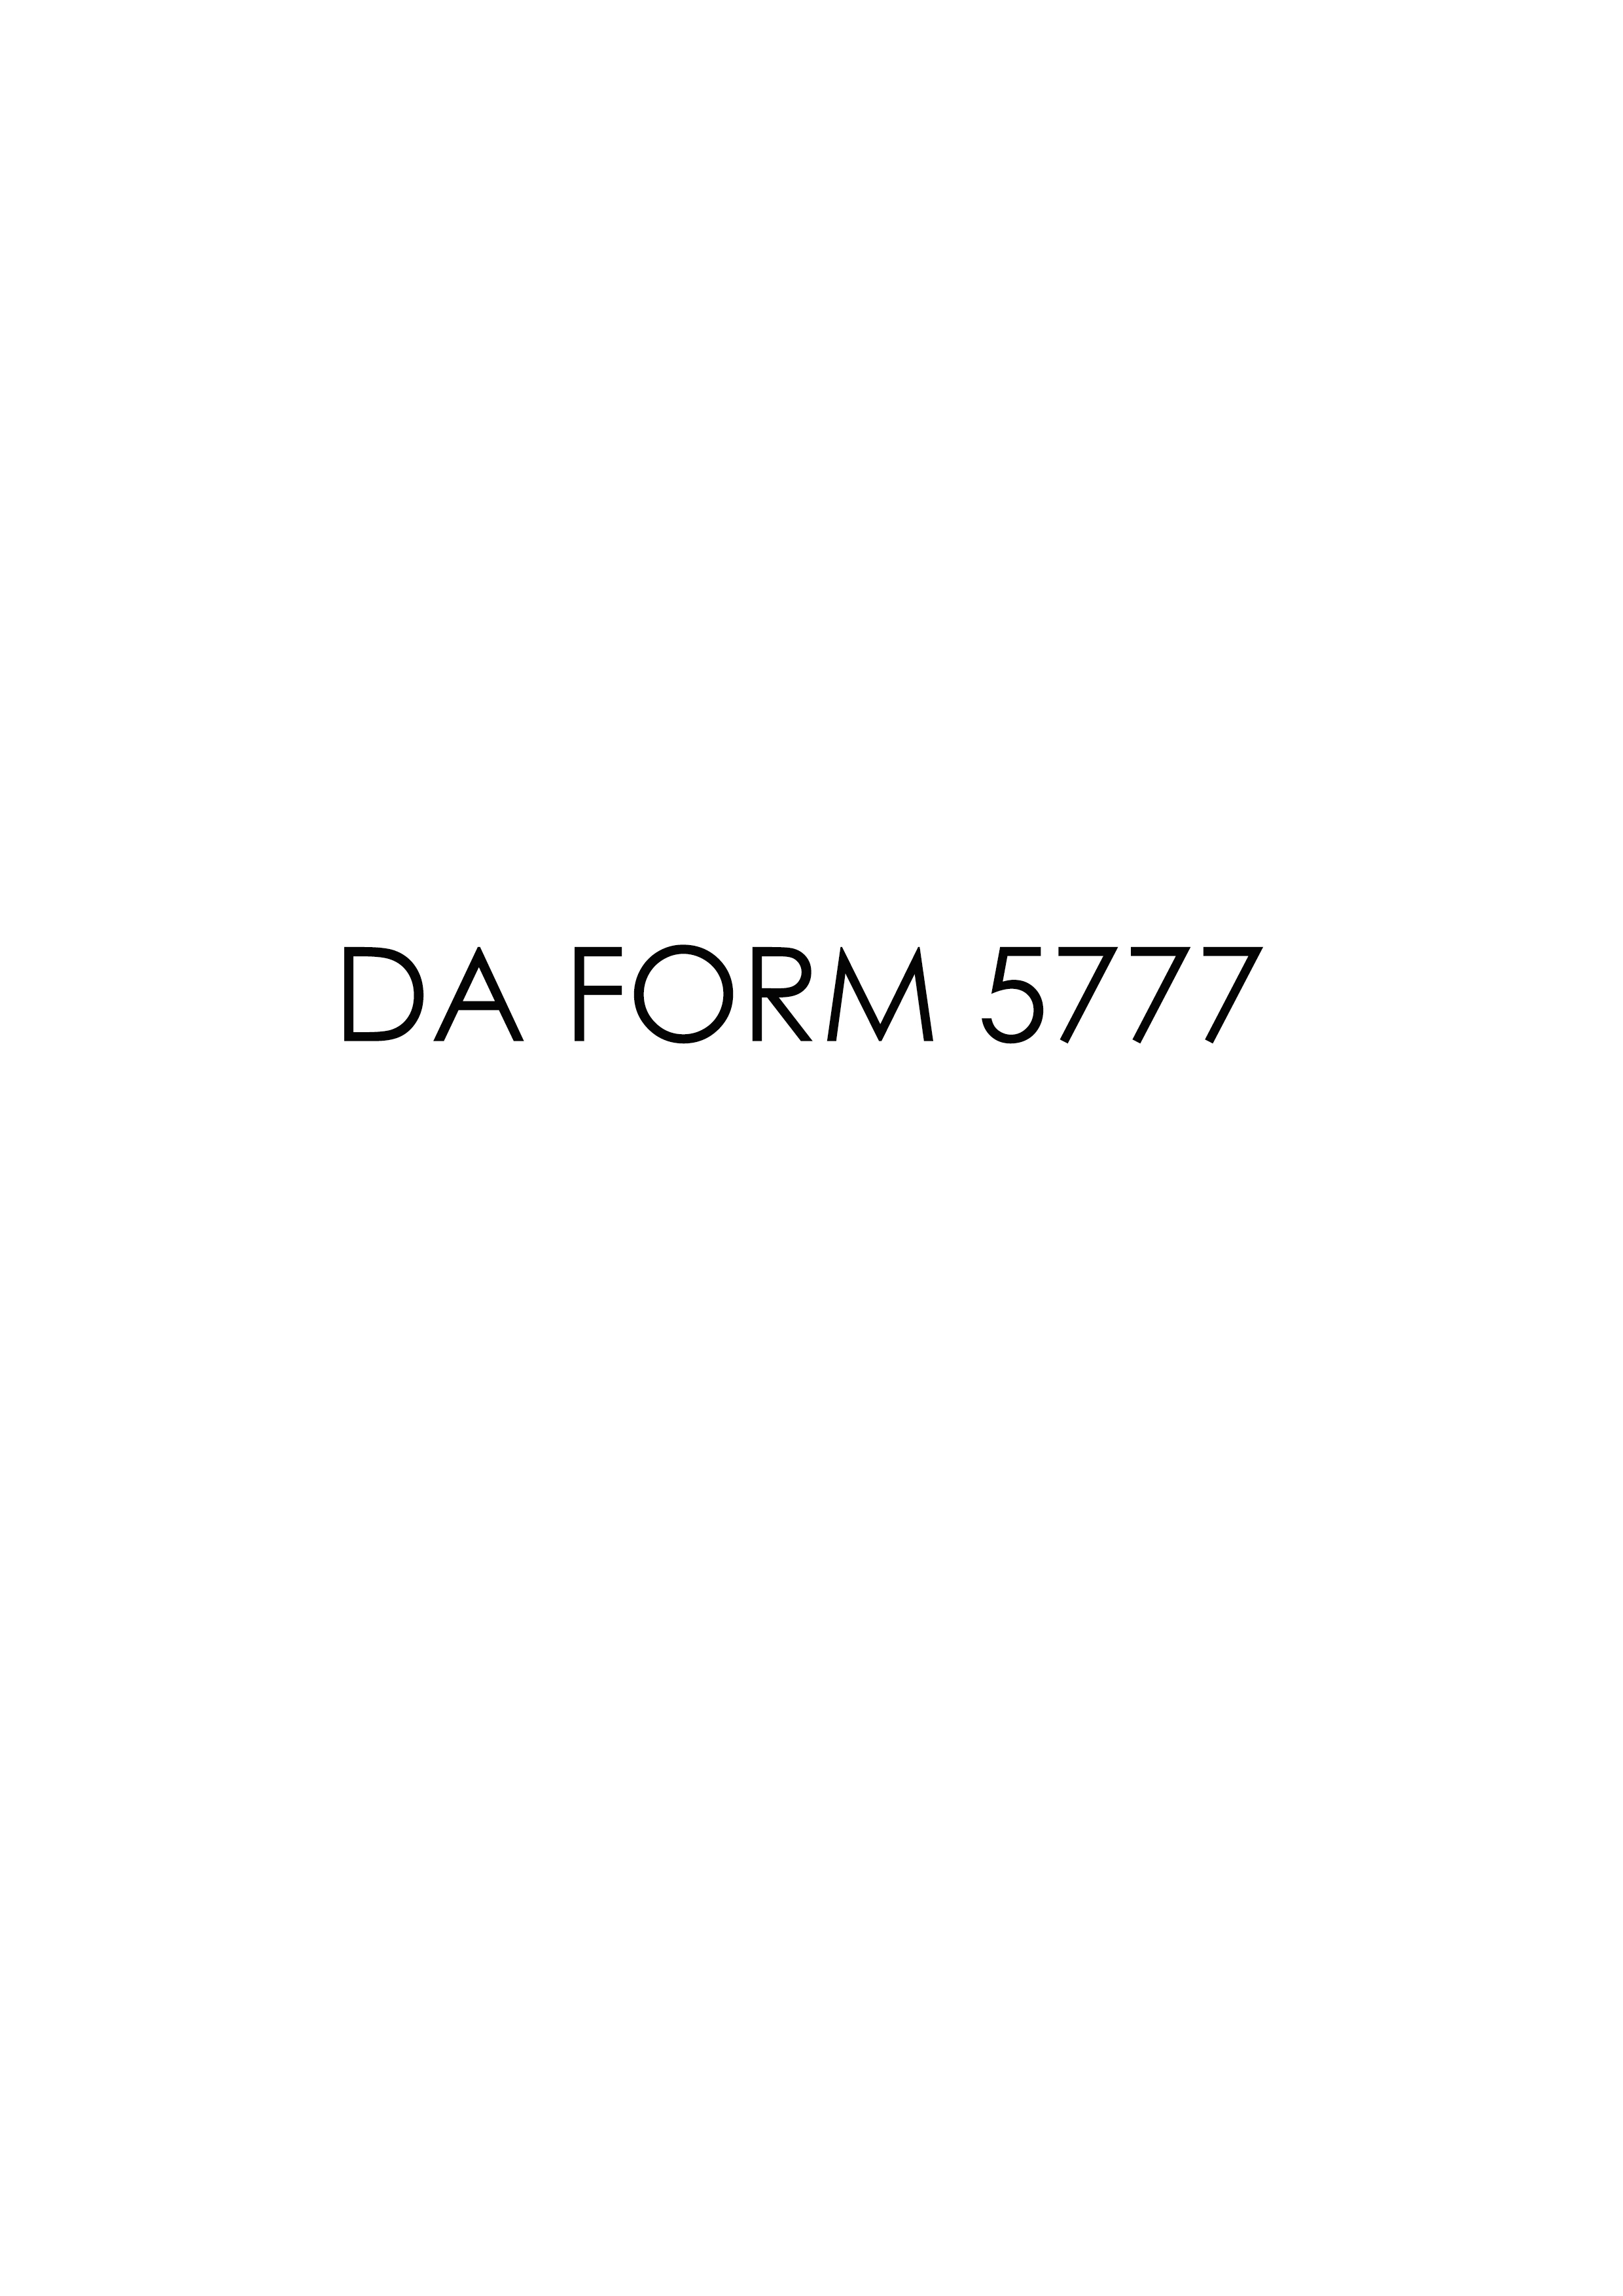 da Form 5777 fillable